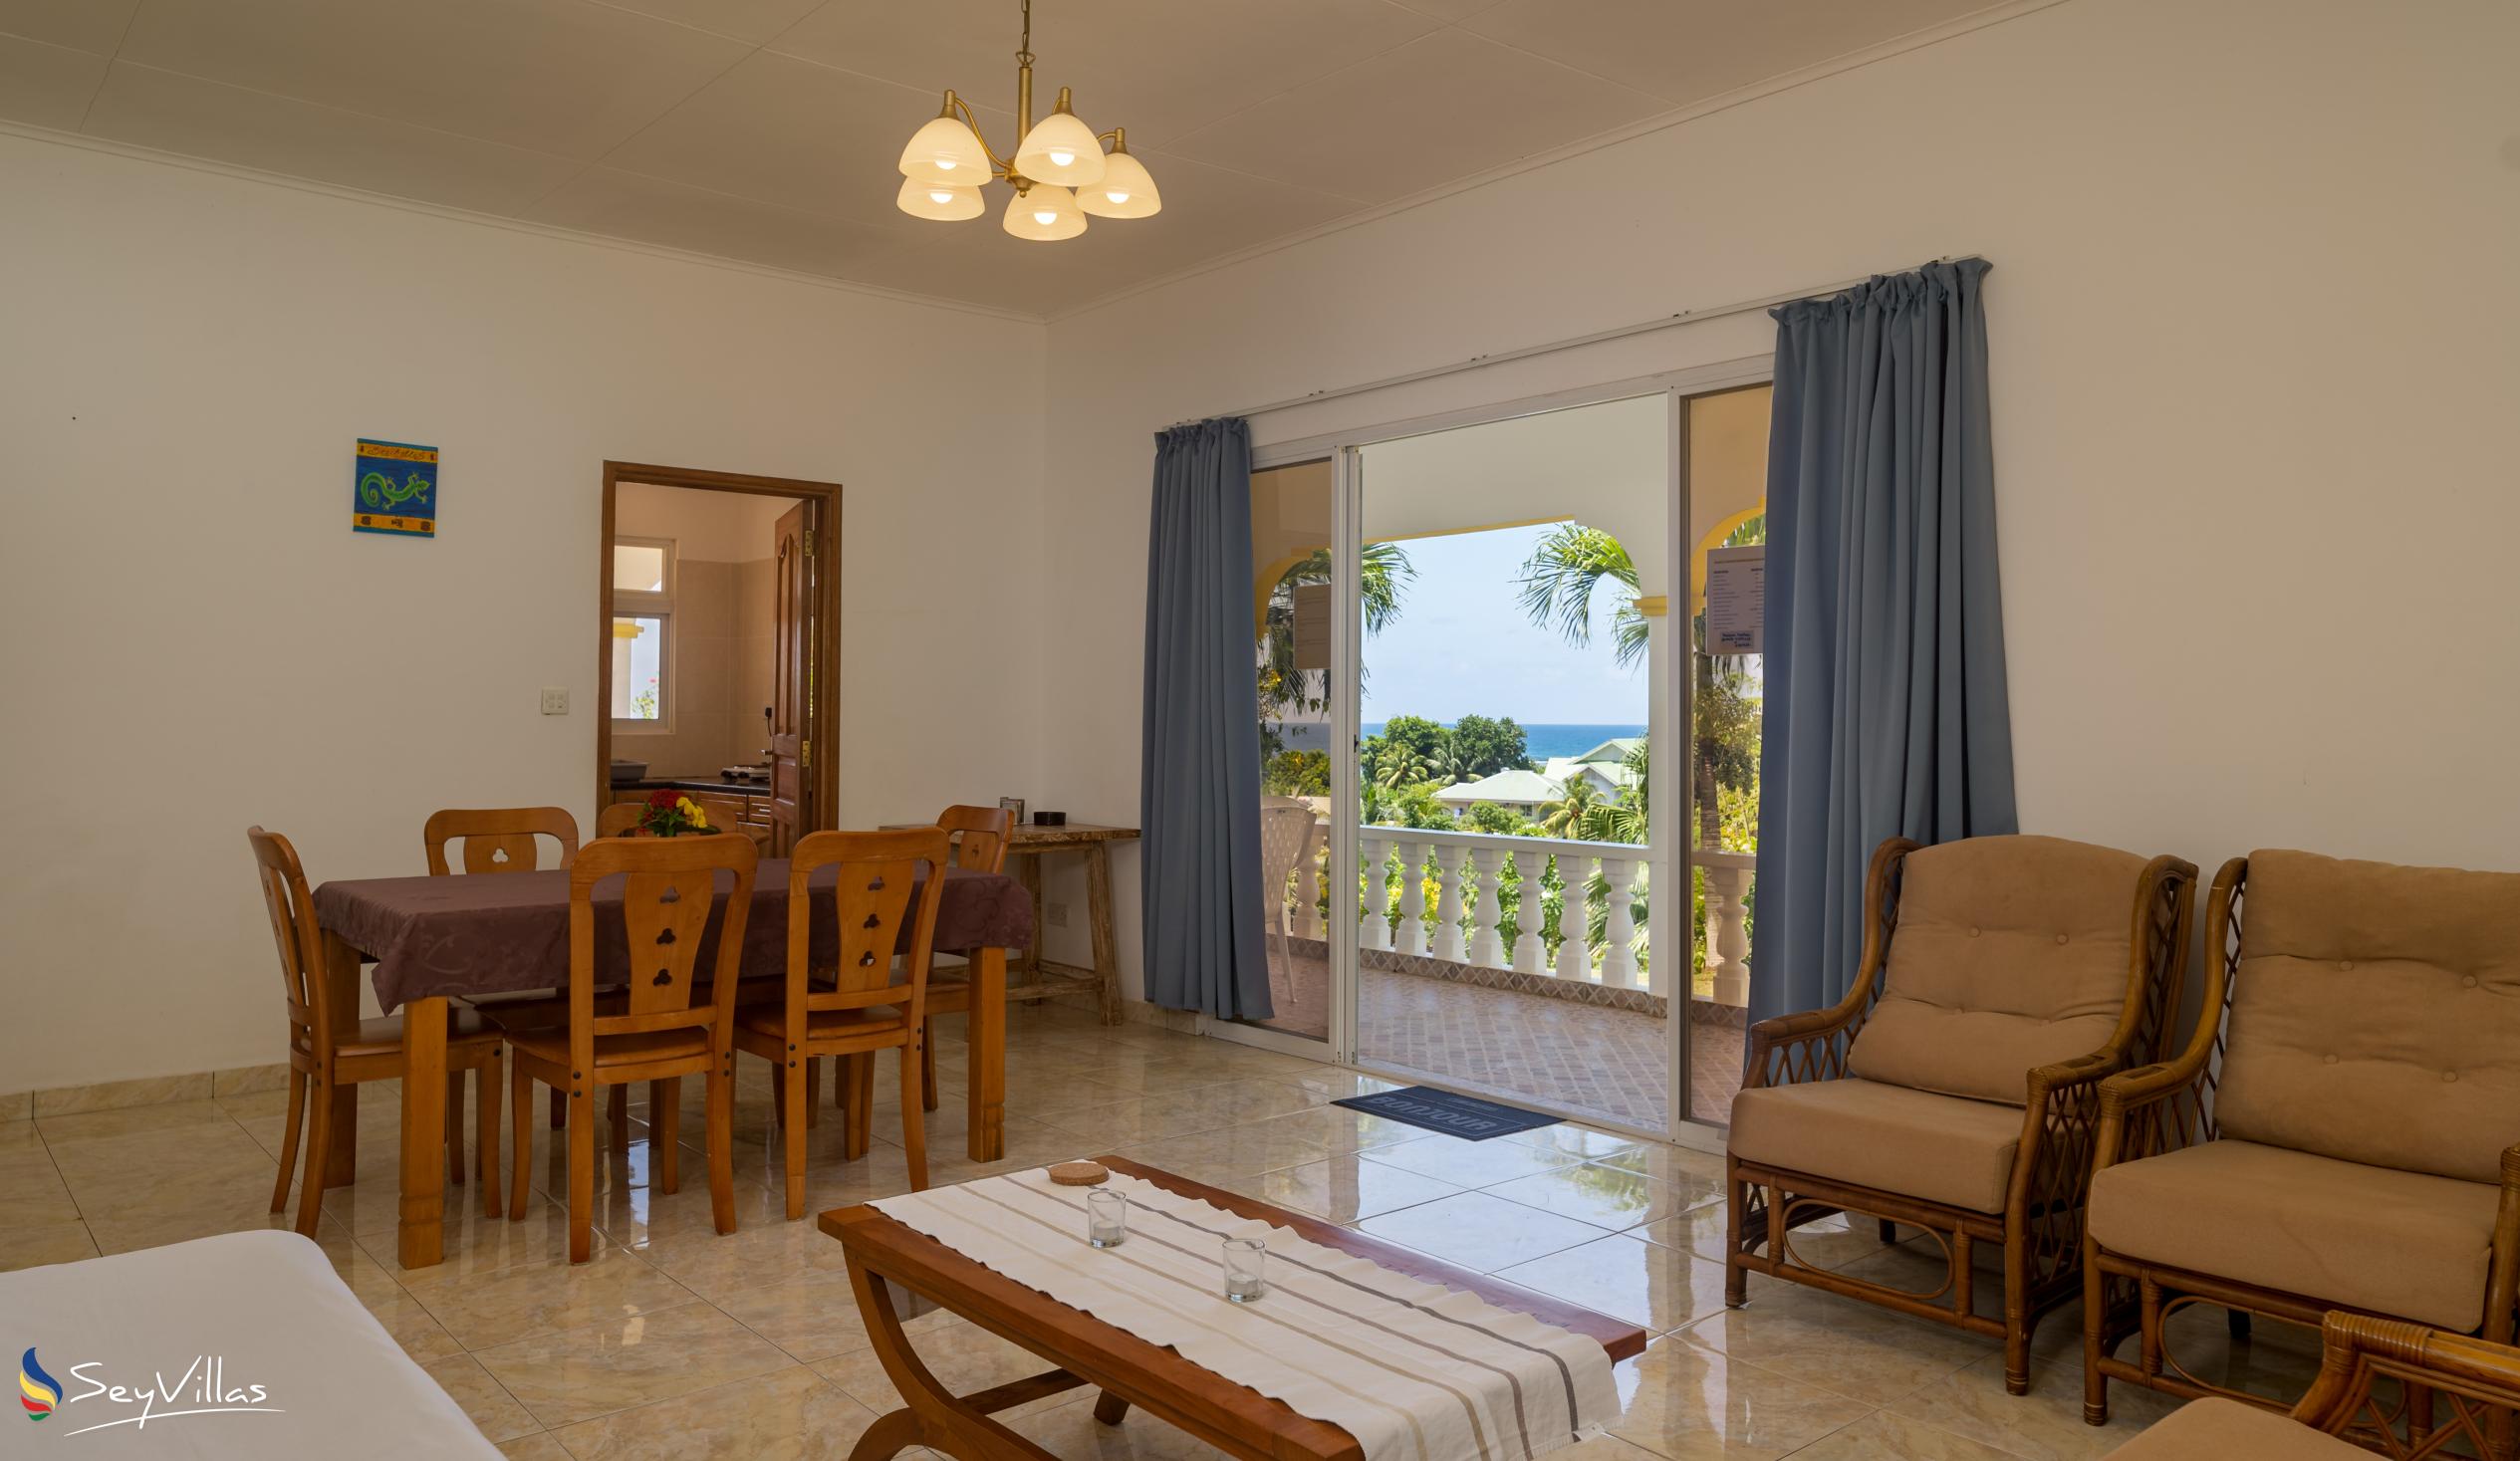 Foto 79: Maison Marikel - Villa mit 2 Schlafzimmern - Mahé (Seychellen)